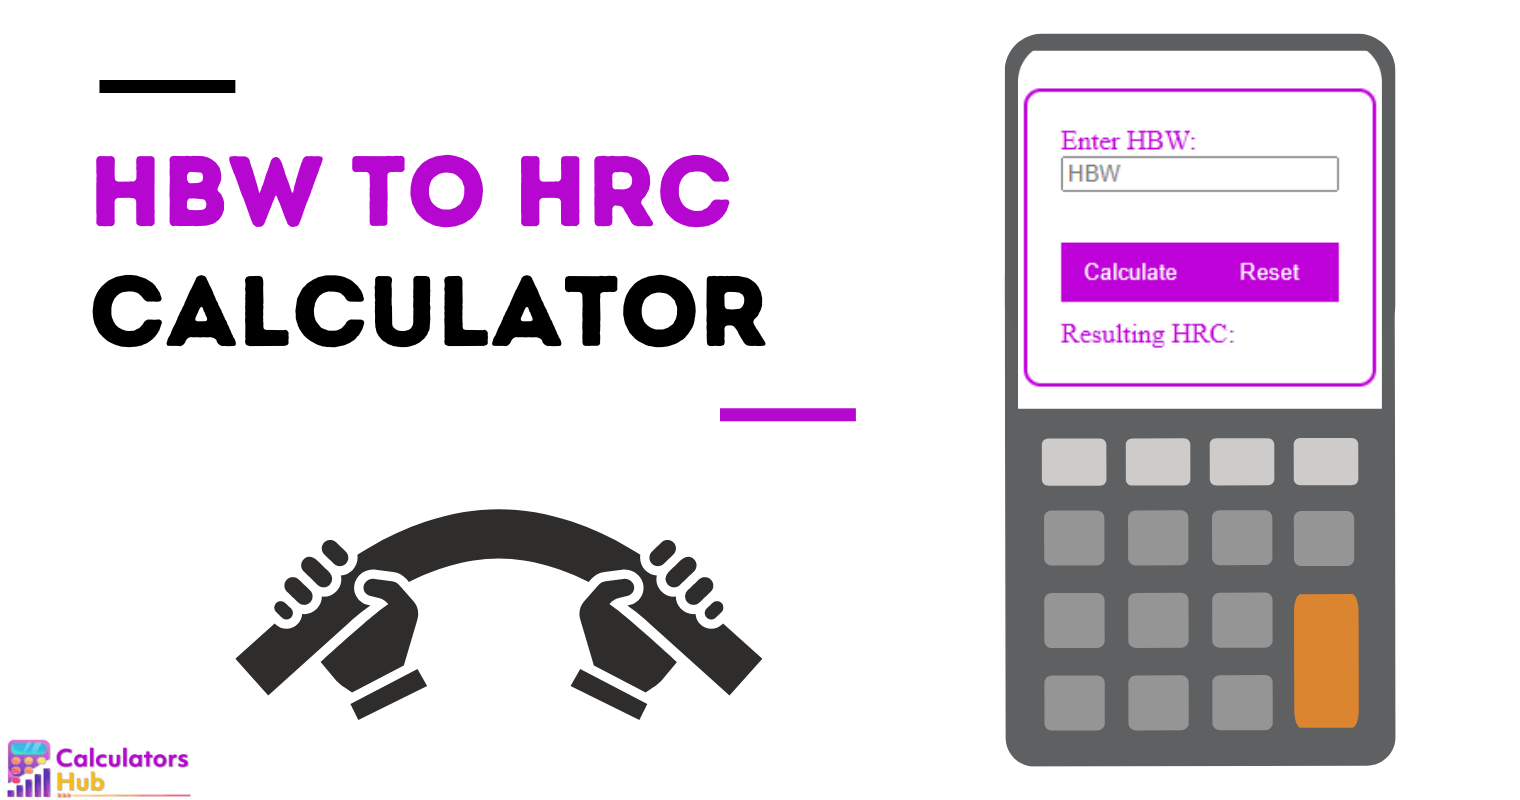 Calculadora de HBW para HRC